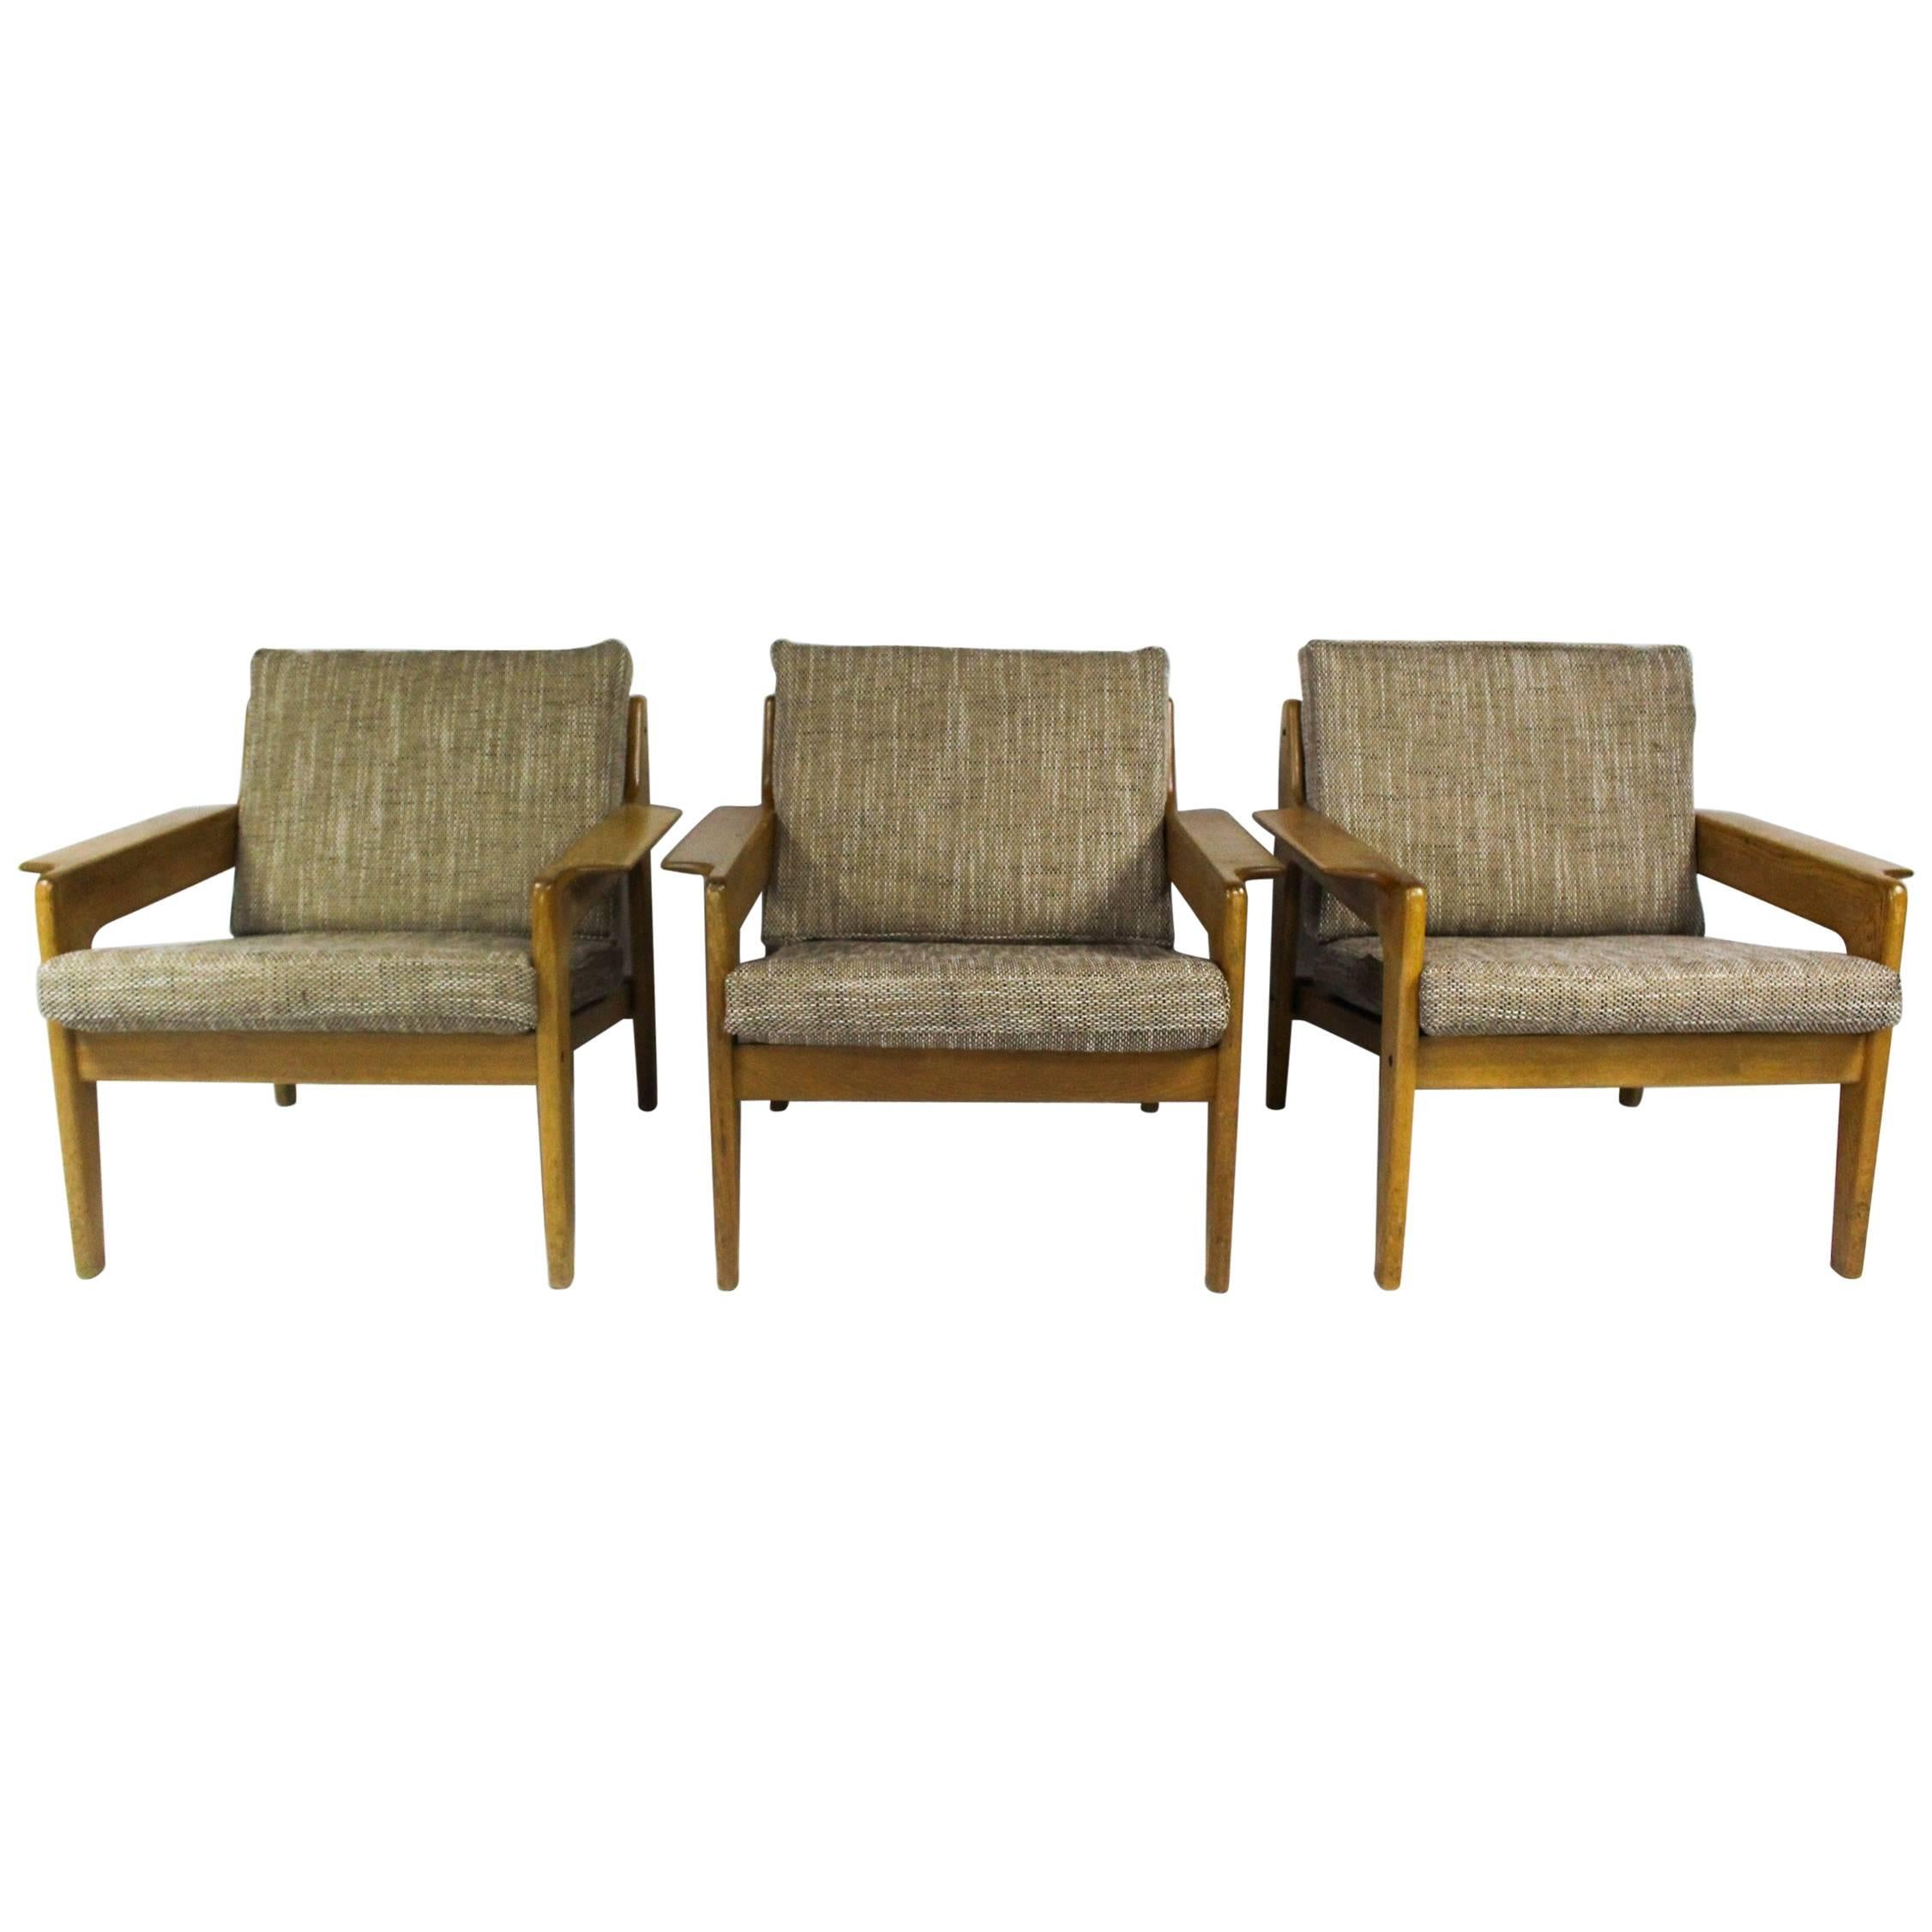 Vintage Danish Lounge Chair by Arne Wahl Iversen for Komfort 1960s For Sale